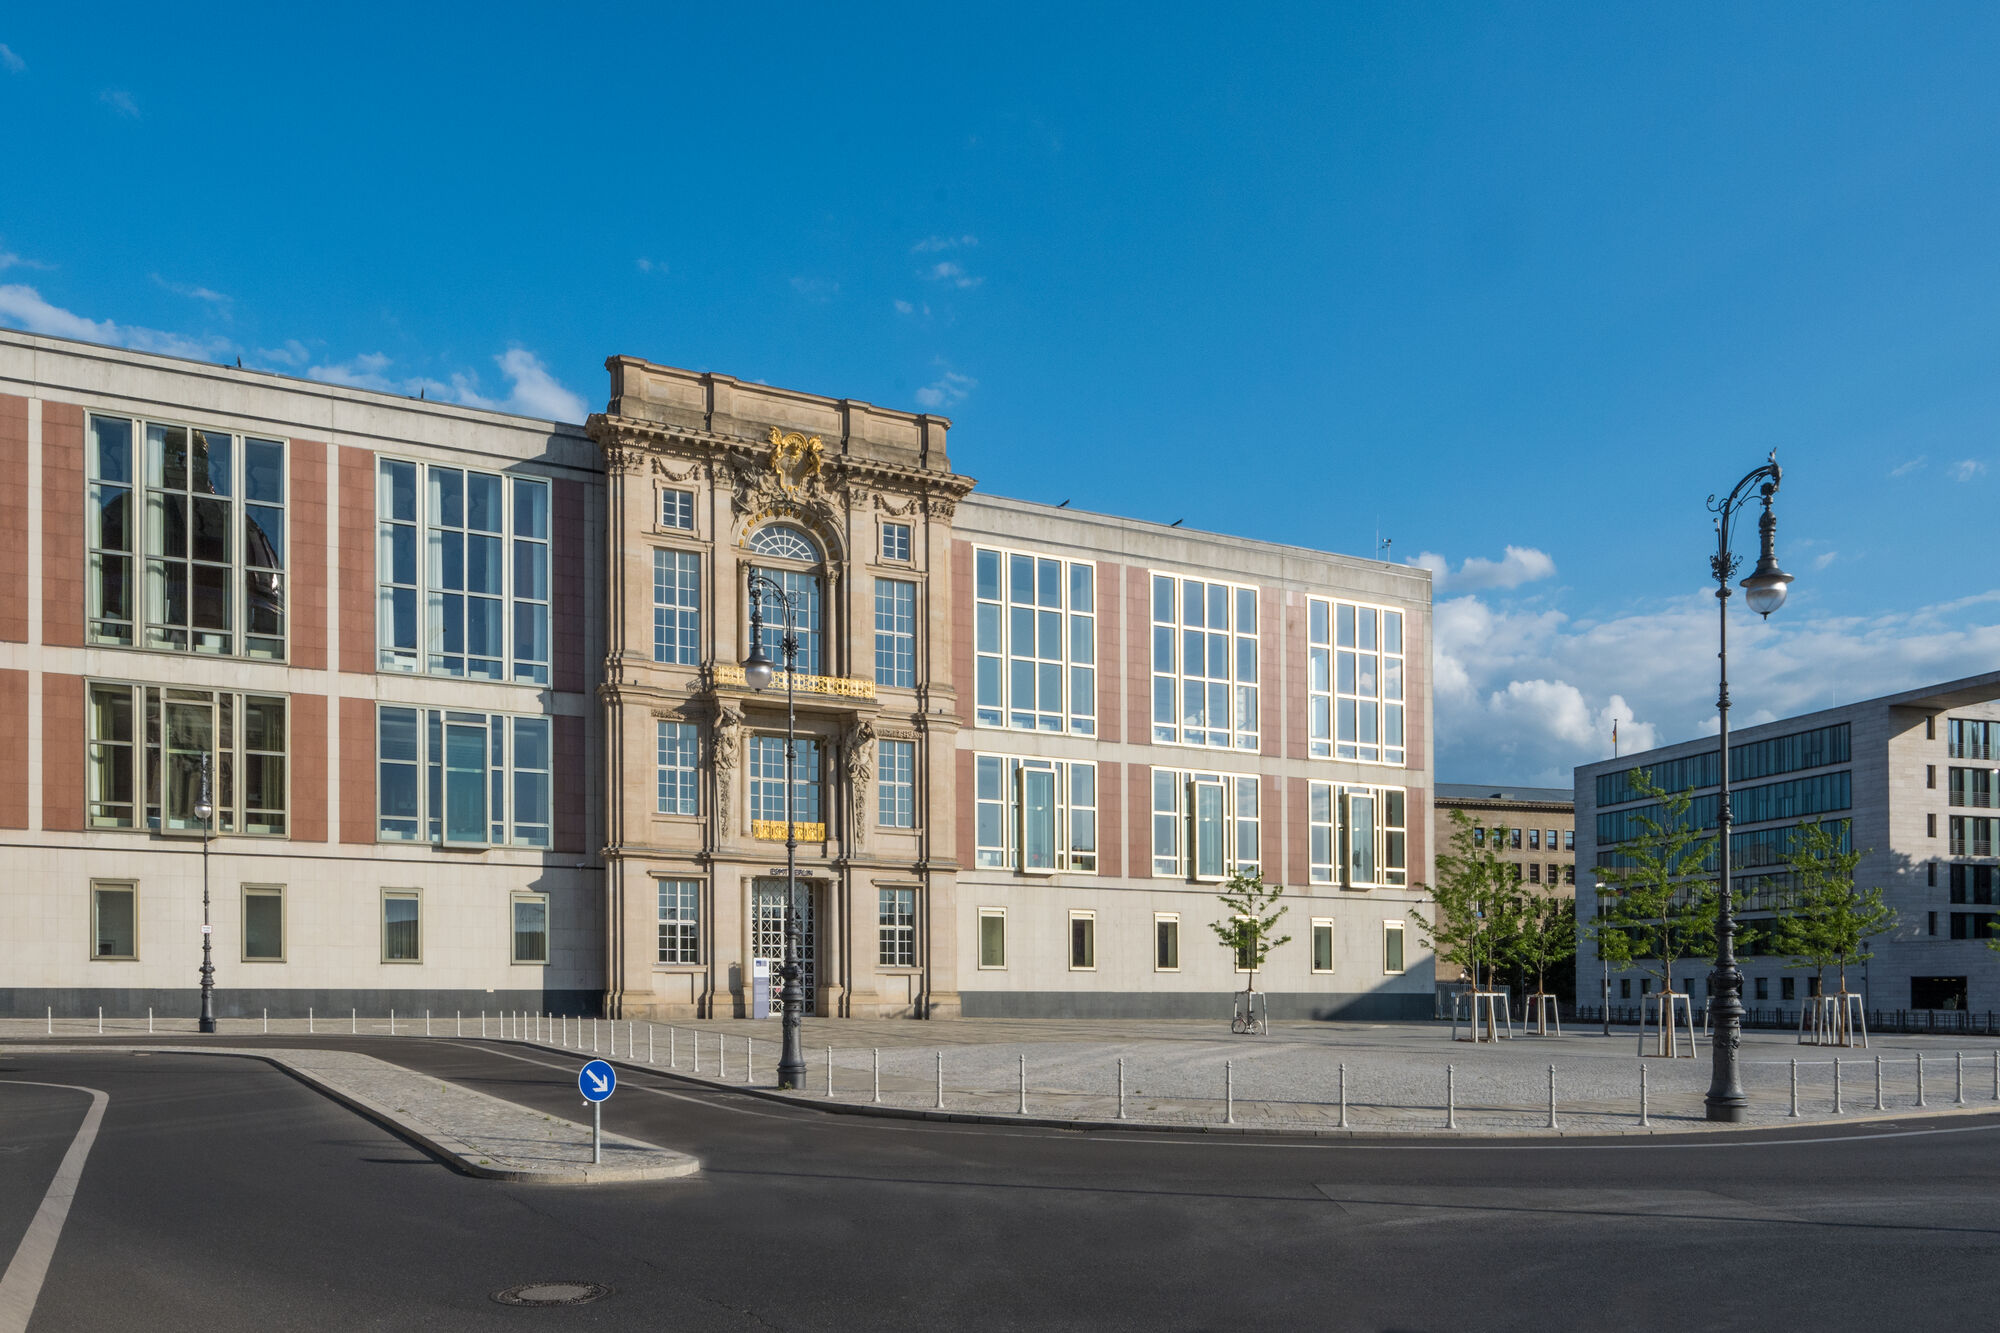 Fachada da ESMT, a principal escola de negócios da Alemanha